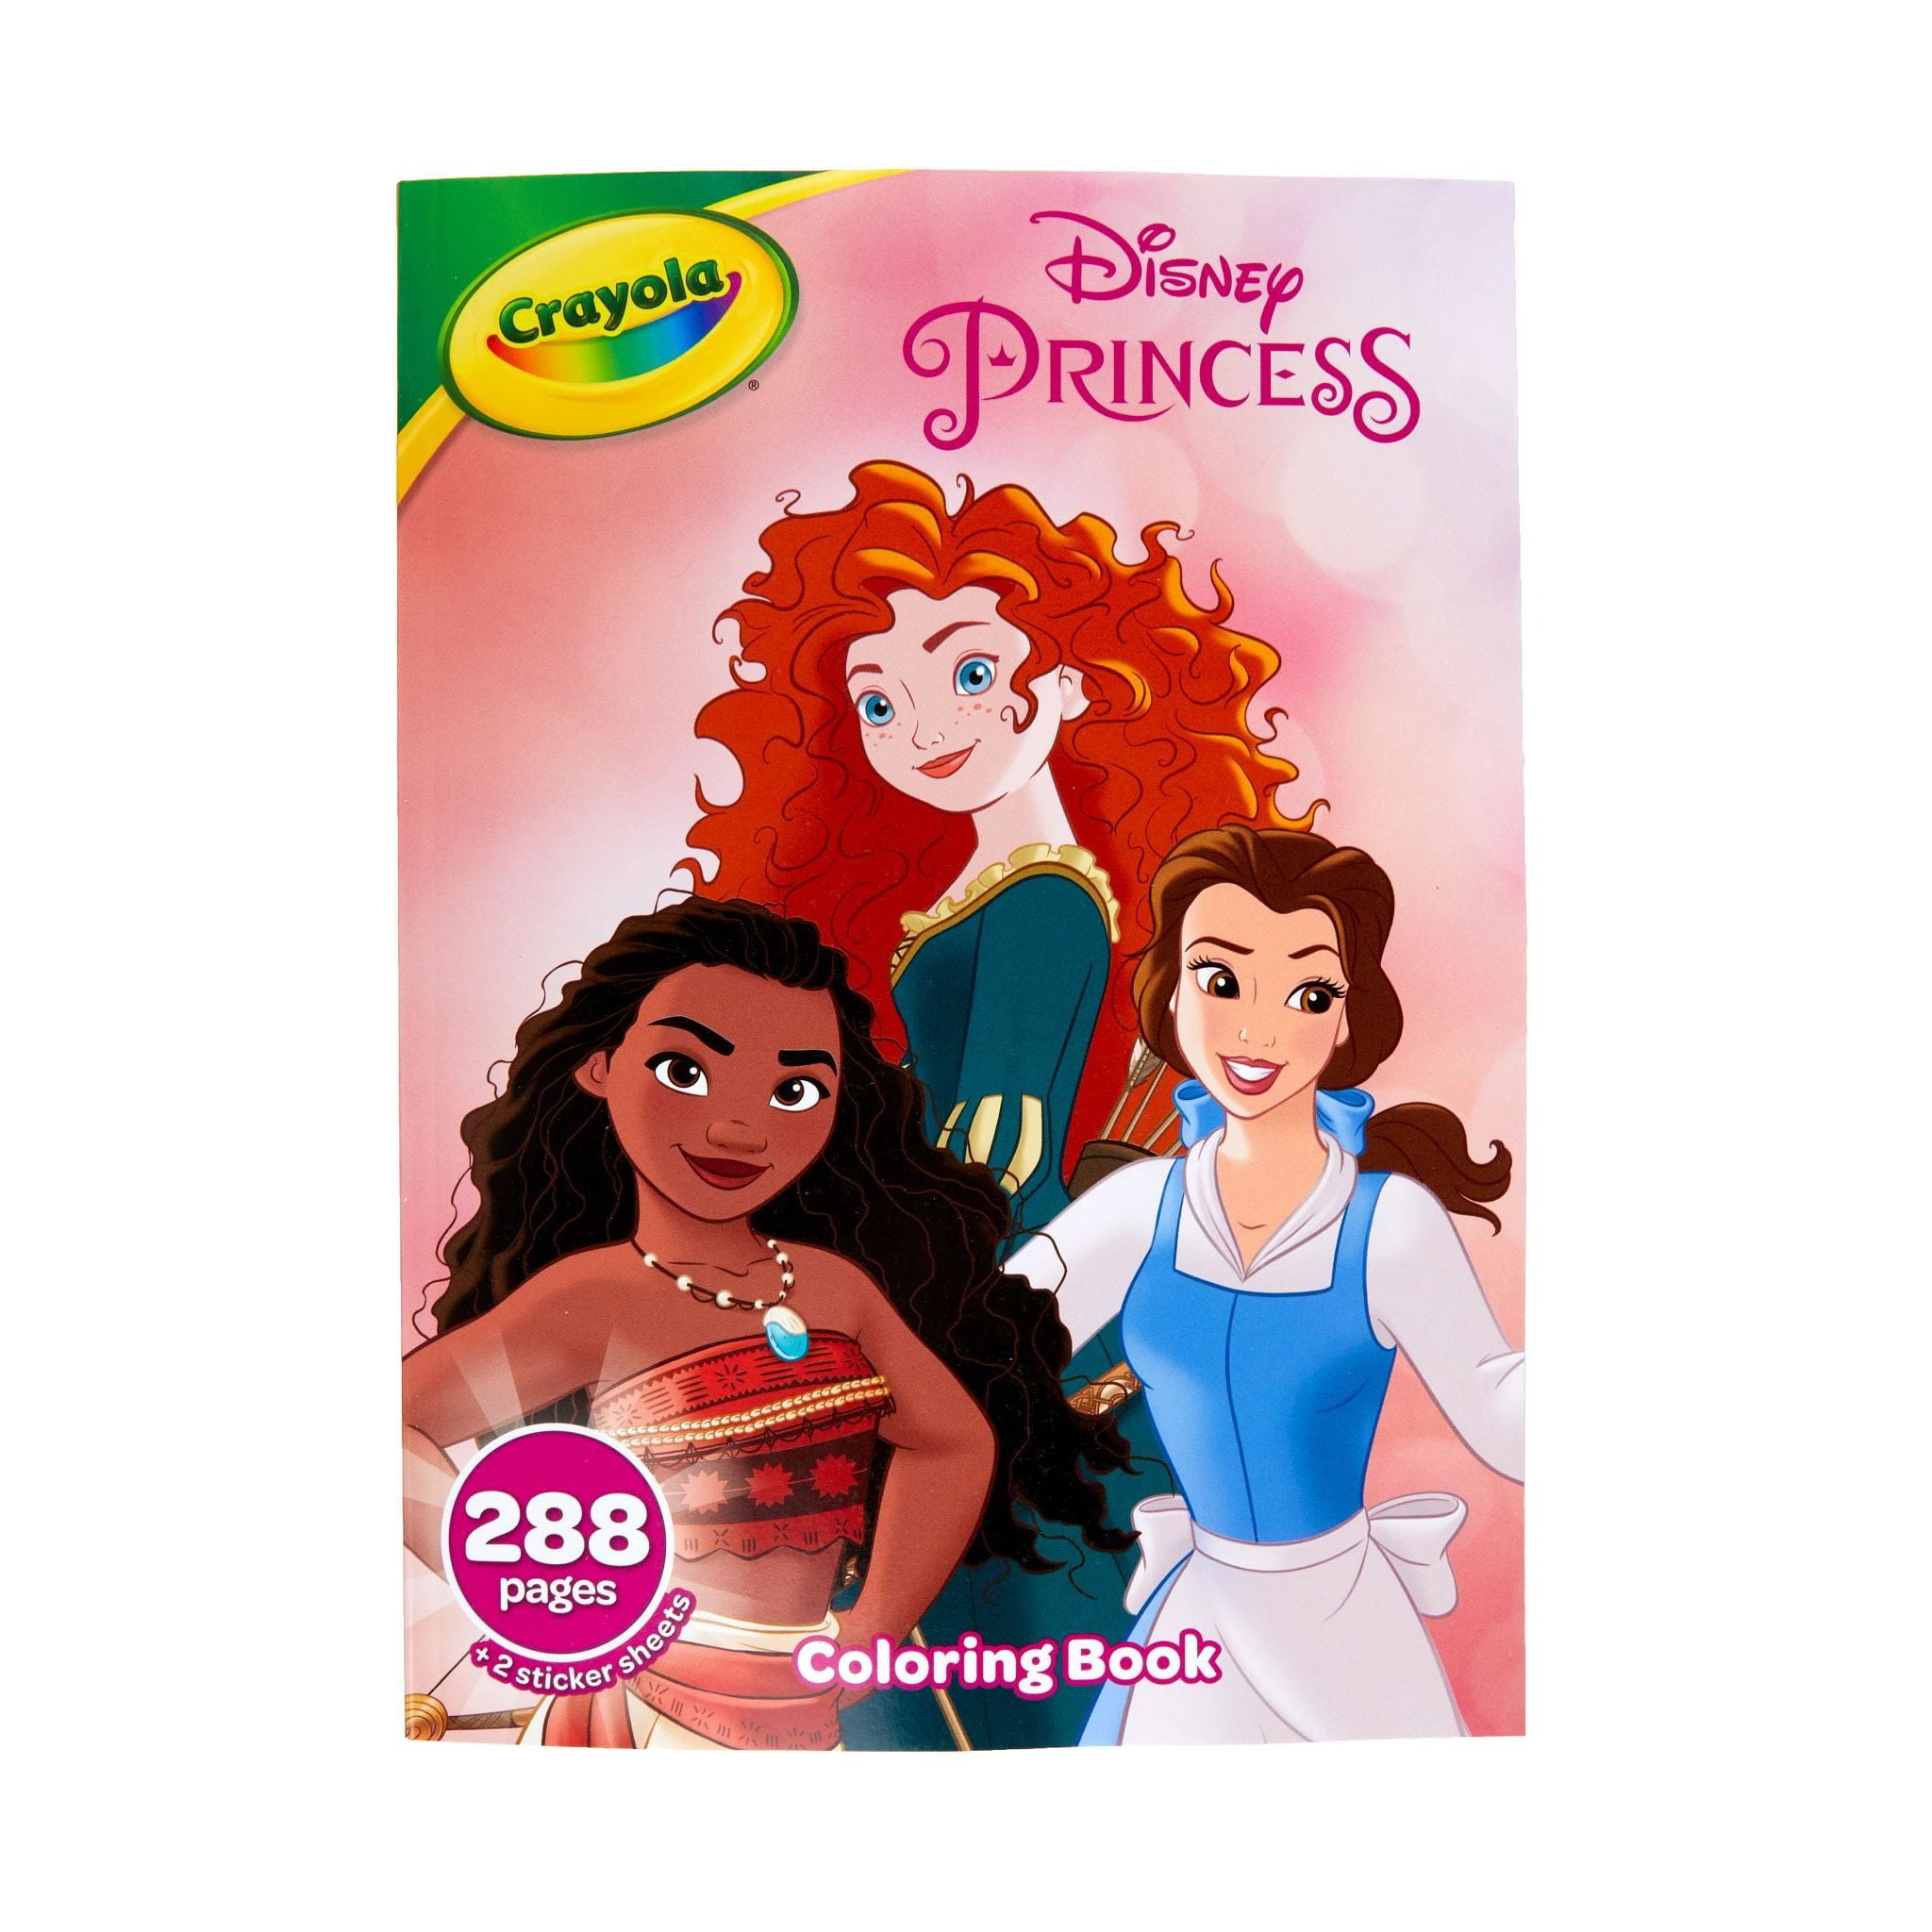 914. Gorgerous Disney Coloring Book - Kayliebooks